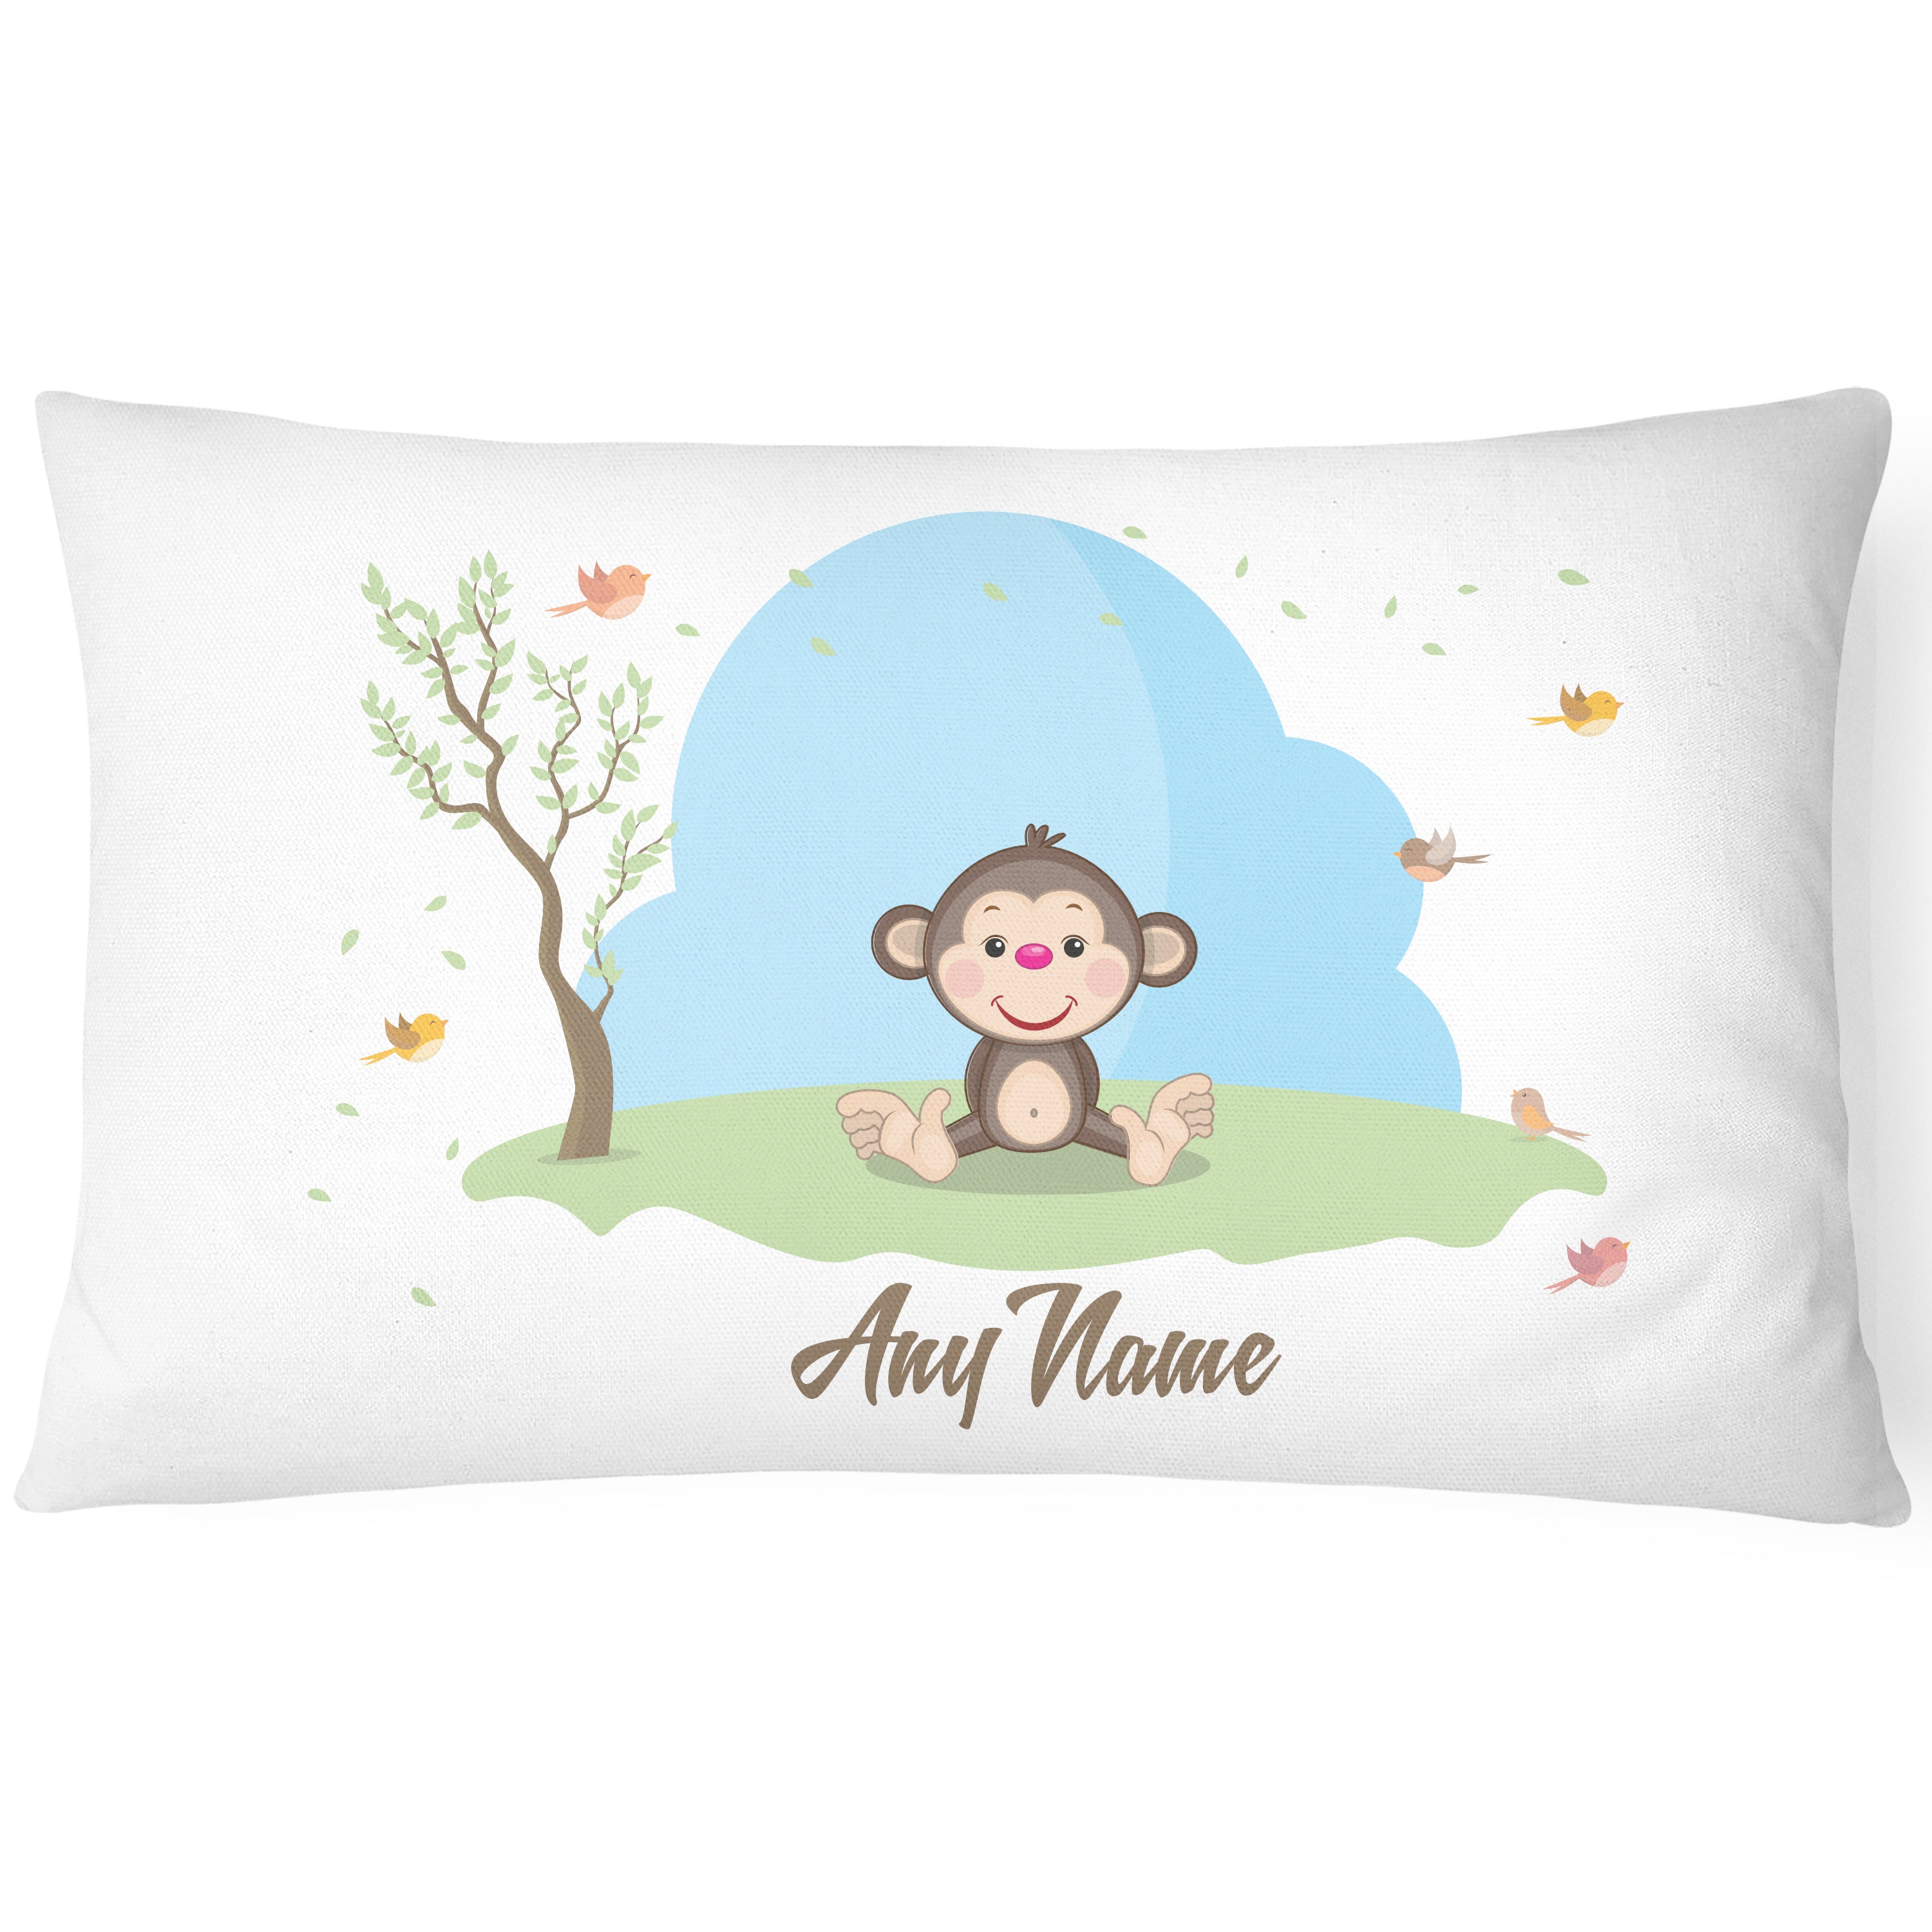 Personalised Children's Pillowcase Cute Animal - Sweet